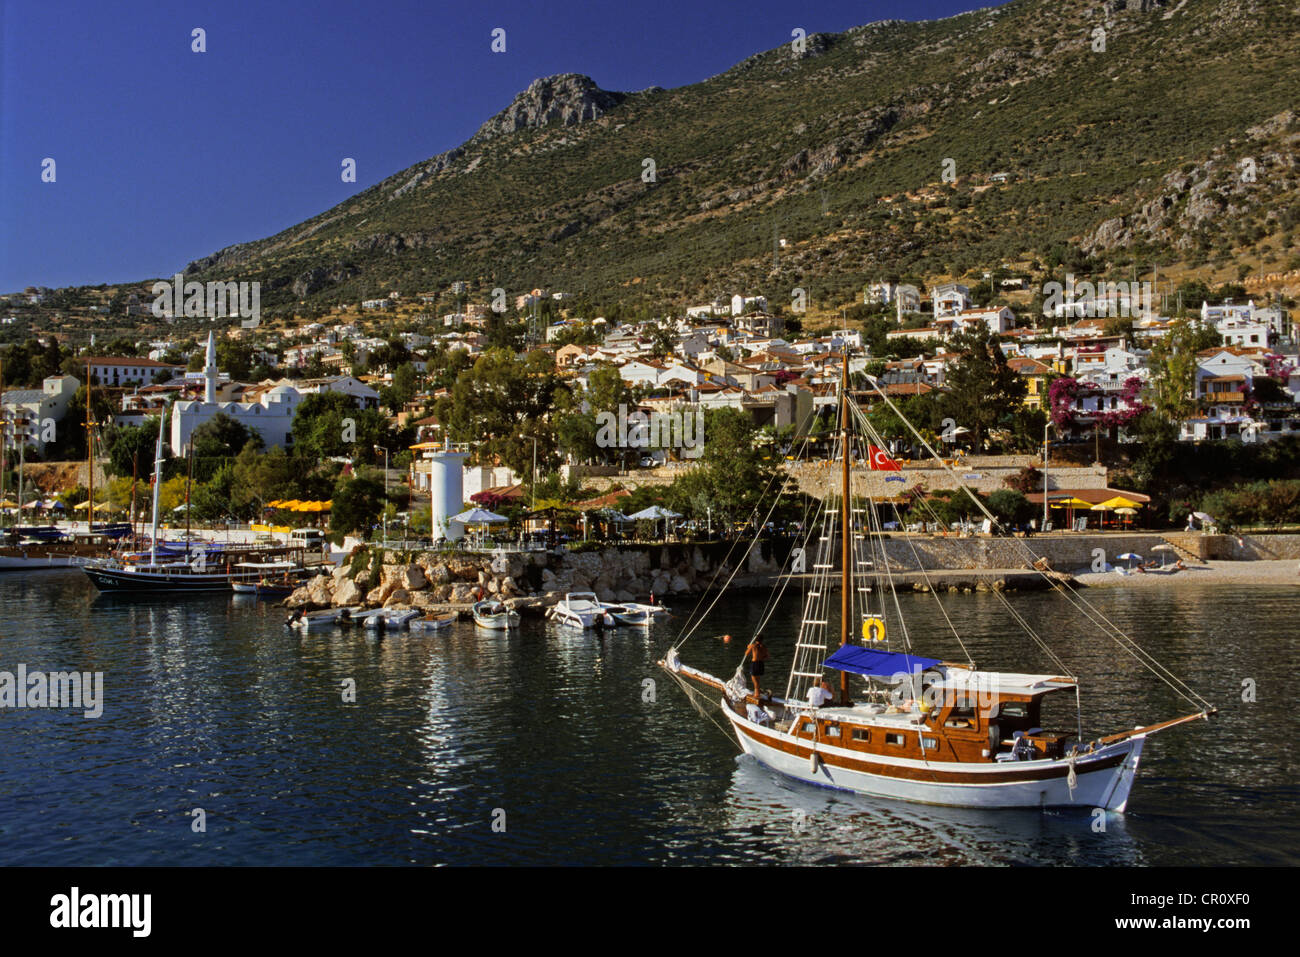 Turkey, Mediterranean region, Turquoise Coast, Lycia, Kalkan, village and fishing harbour Stock Photo